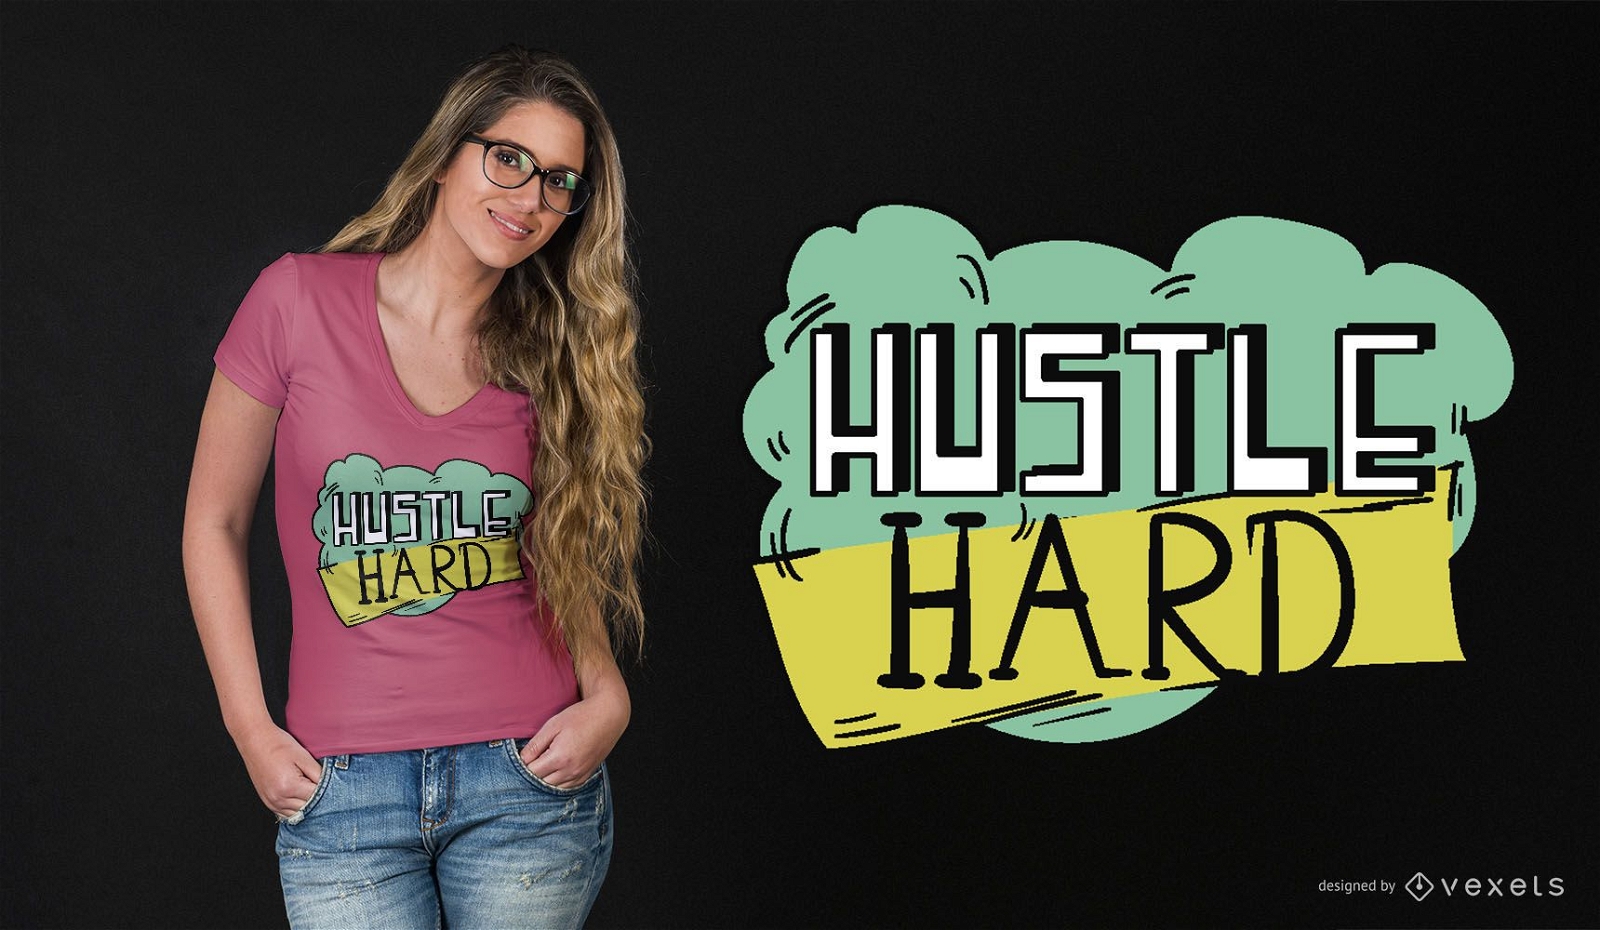 Hustle hard t-shirt design